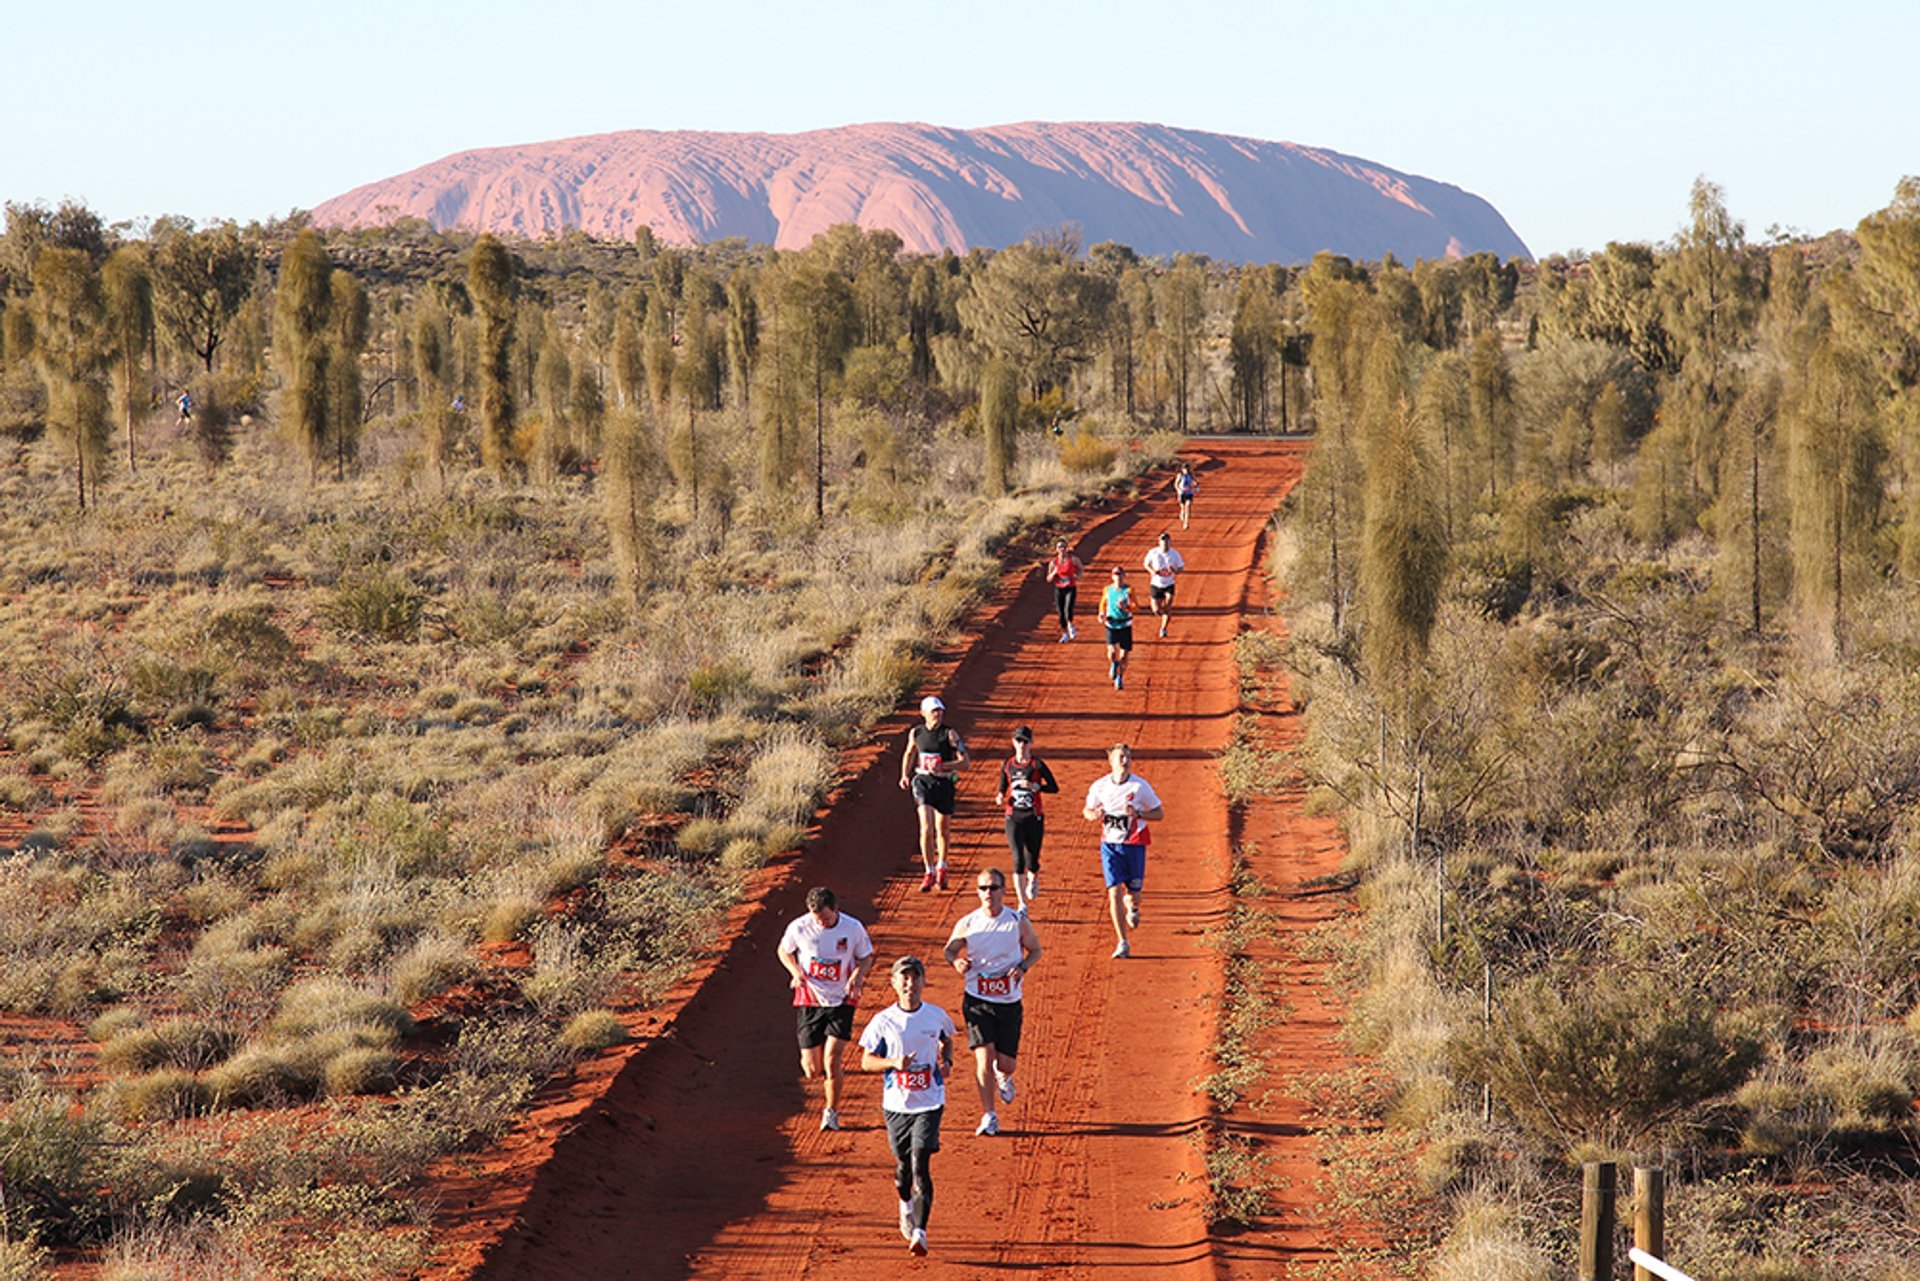 Australian Outback Marathon 2022 Dates